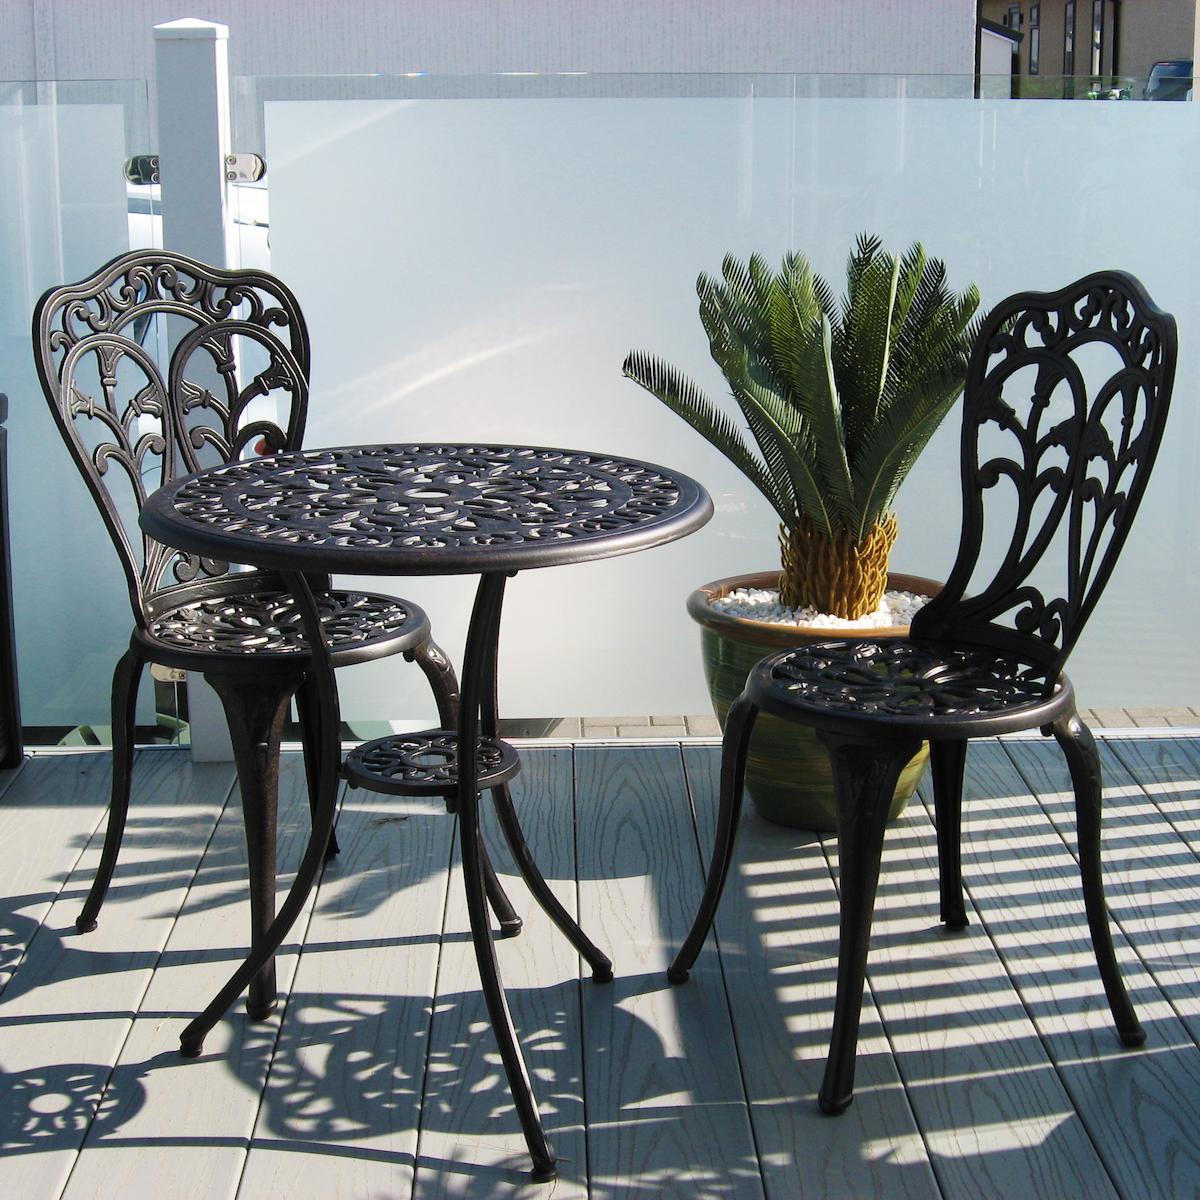 Garden furniture trends for summer 2022: Small, Balcony & City Gardens